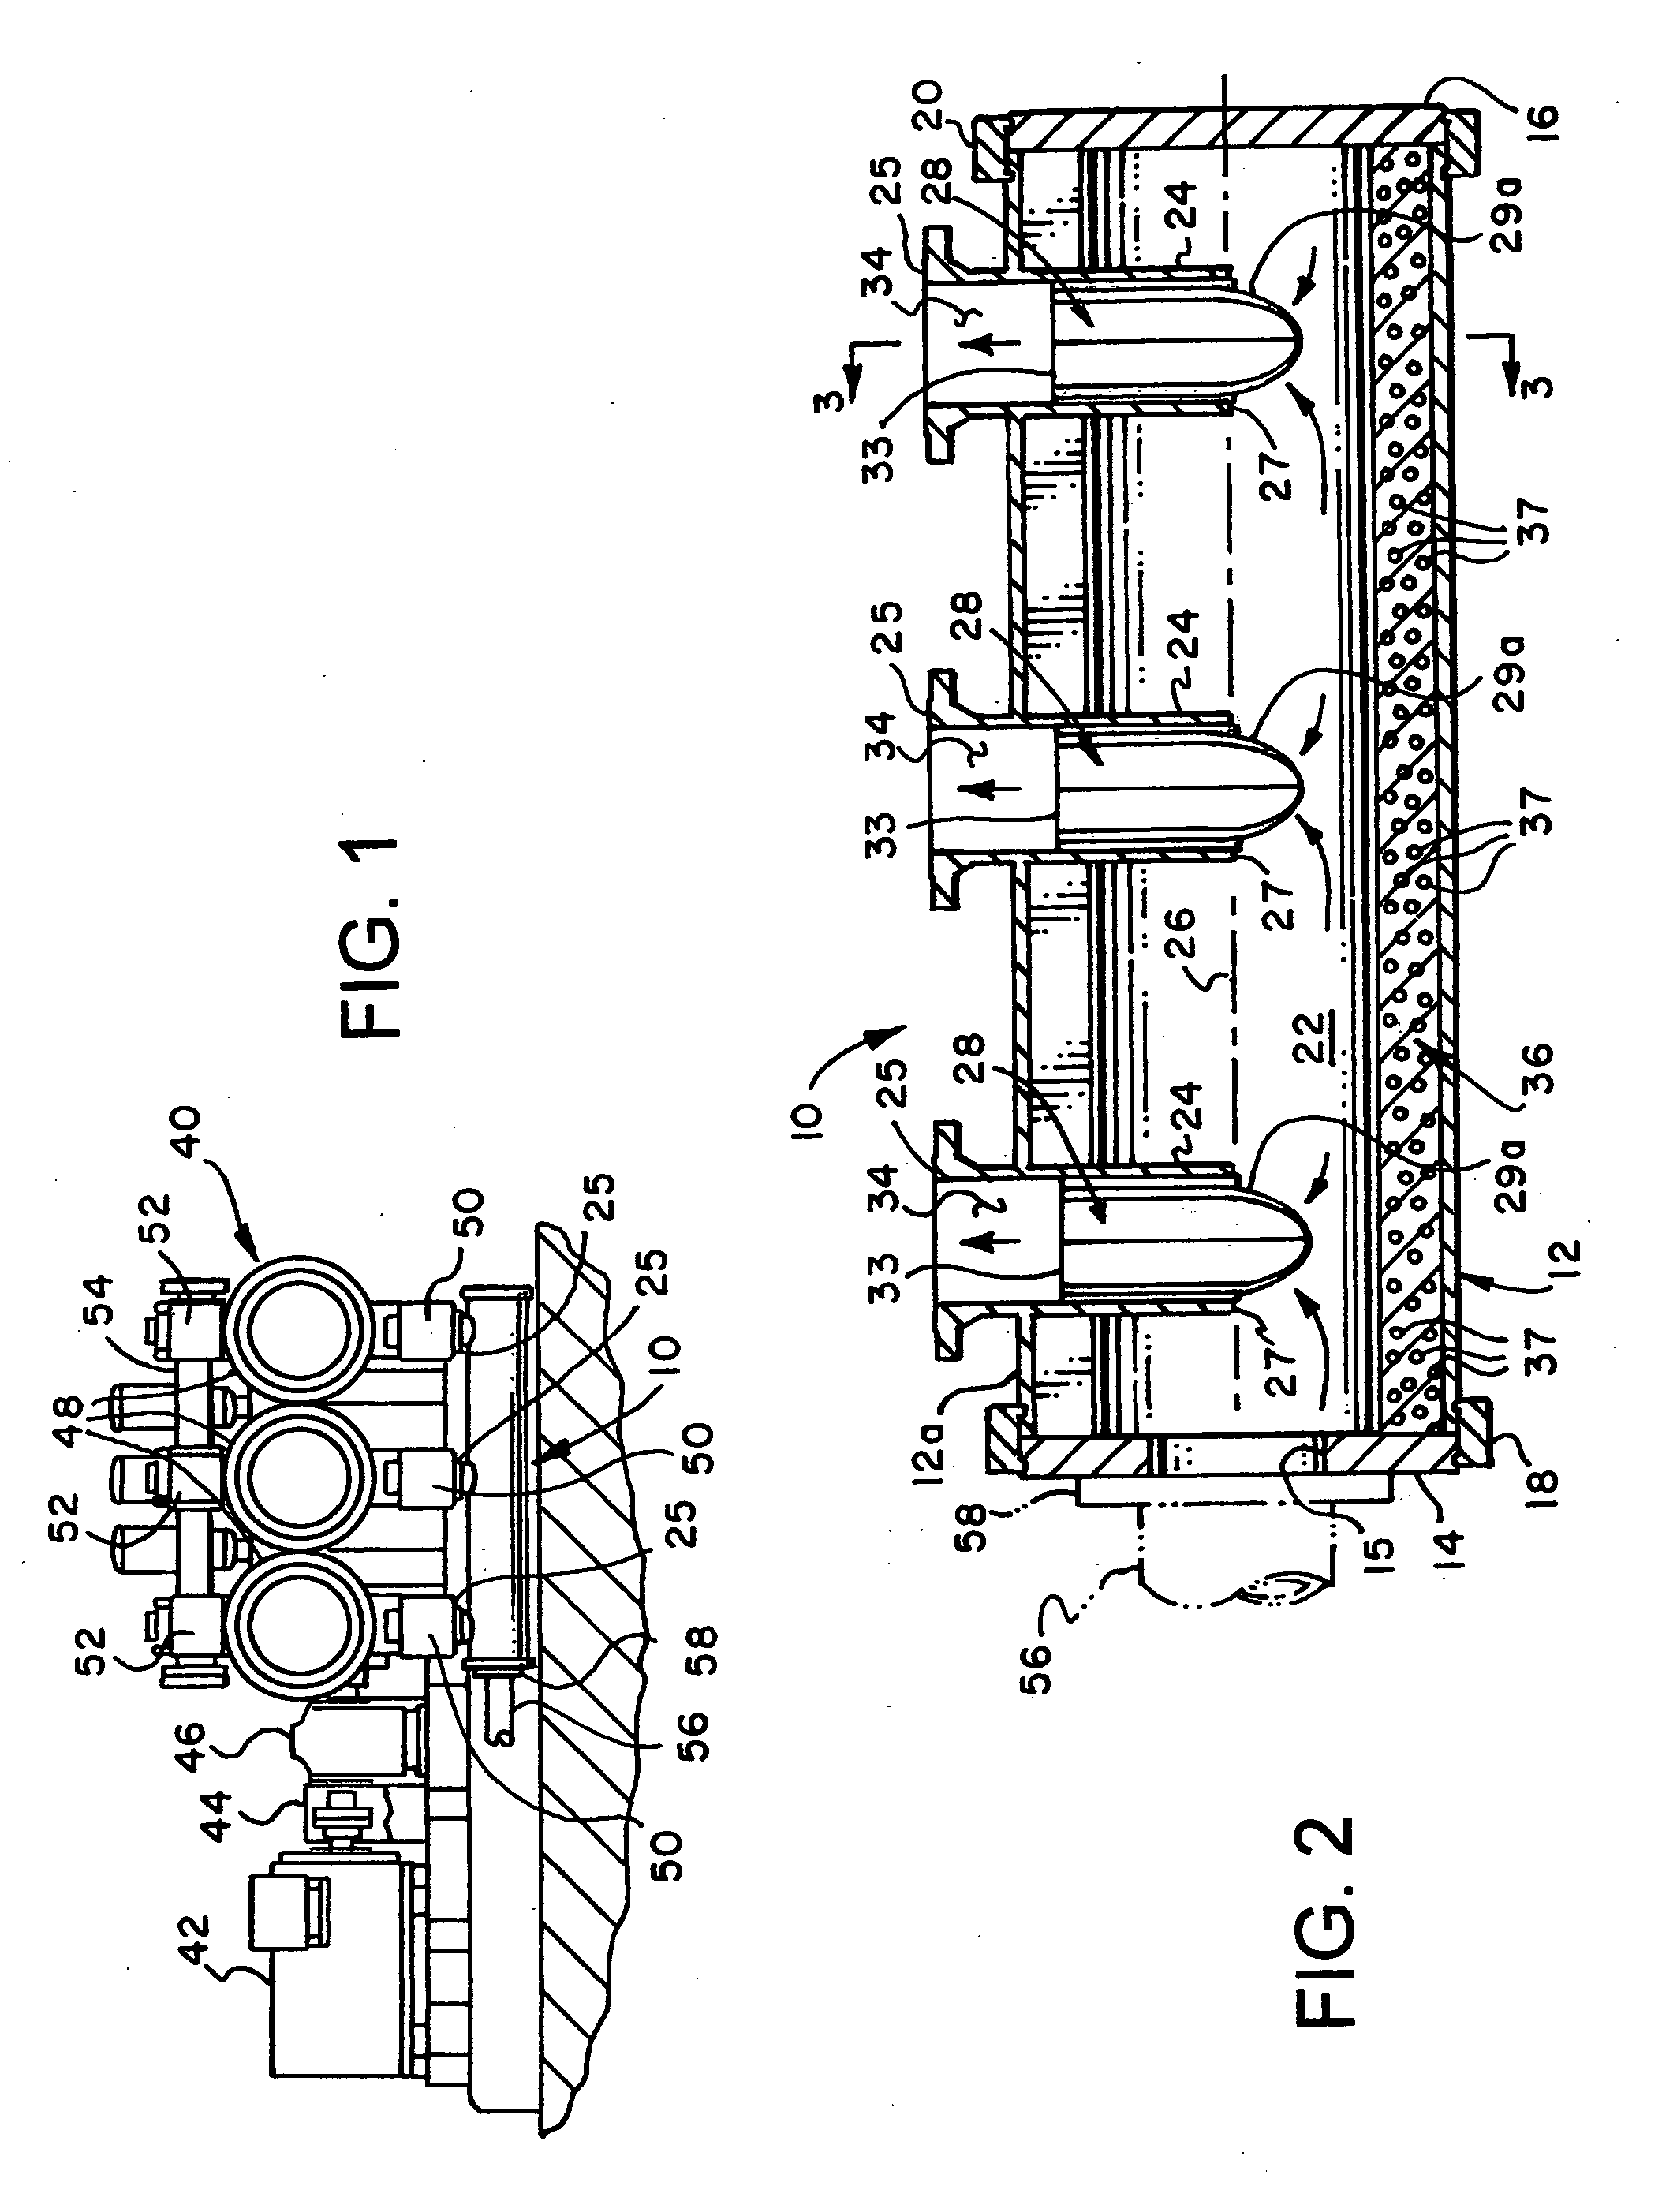 Pump inlet manifold